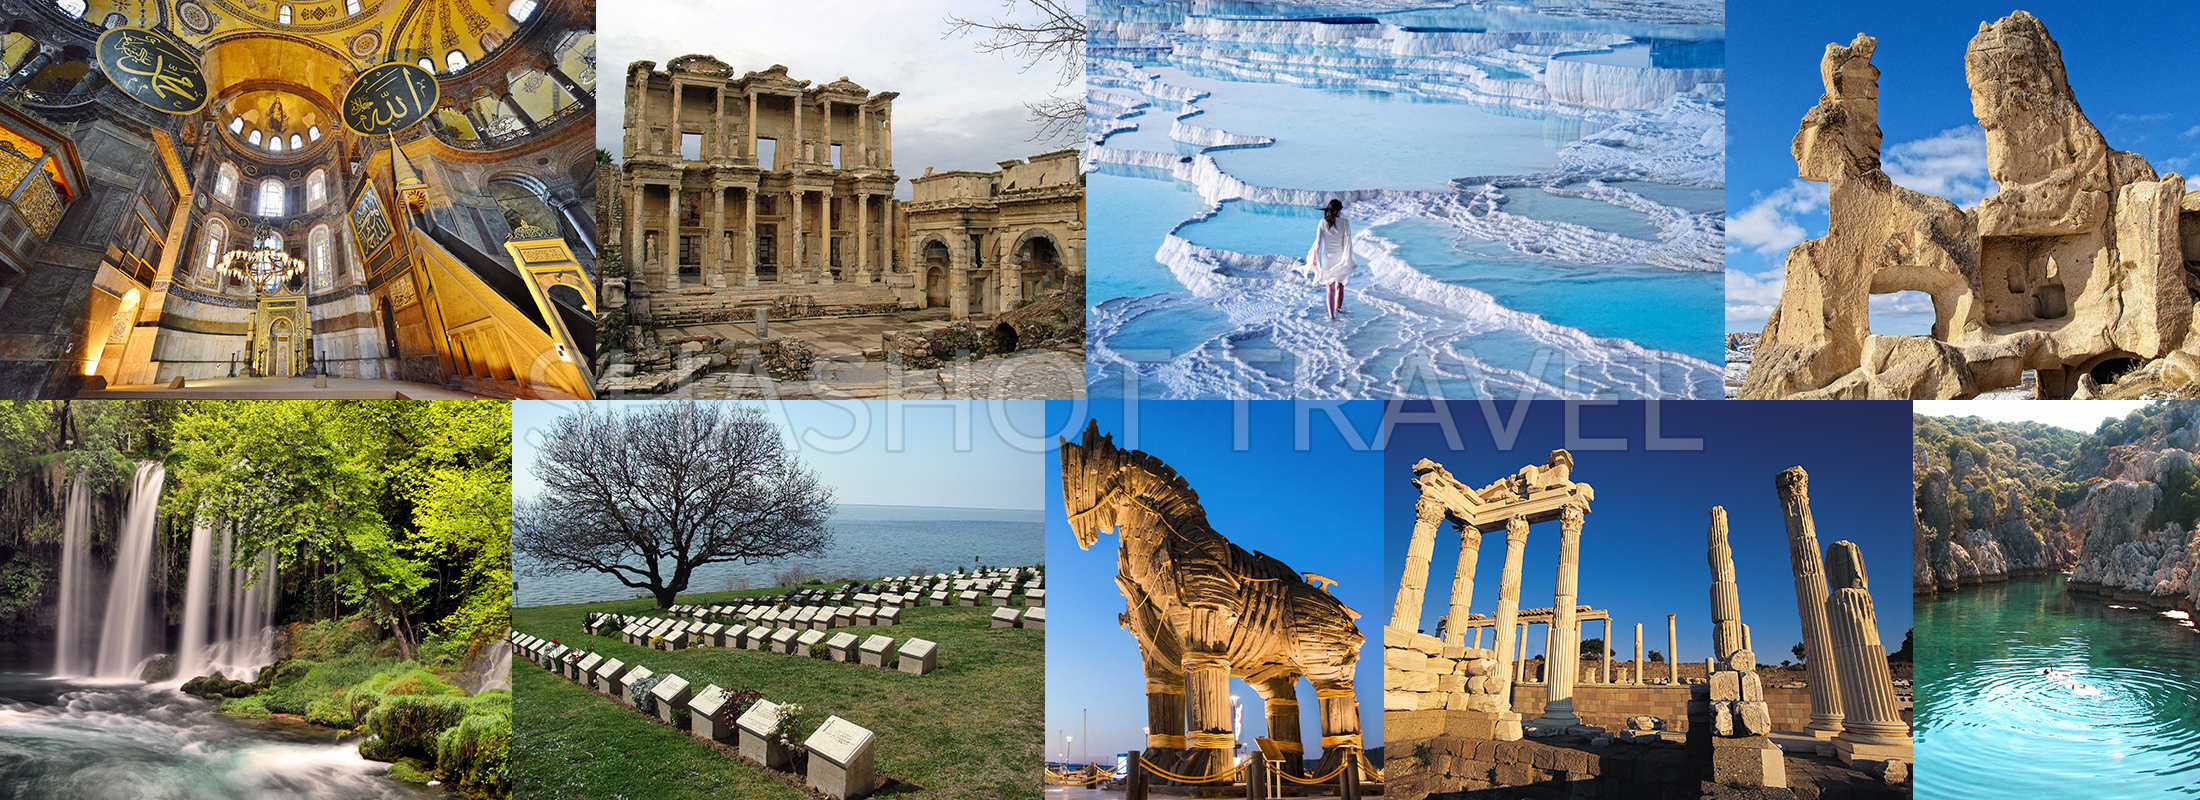 turkey-tours-istanbul-hagia-sophia-museum-ephesus-pamukkale-cappadocia-antalya-duden-waterfall-gallipoli-troy-pergamon-blue-cruise